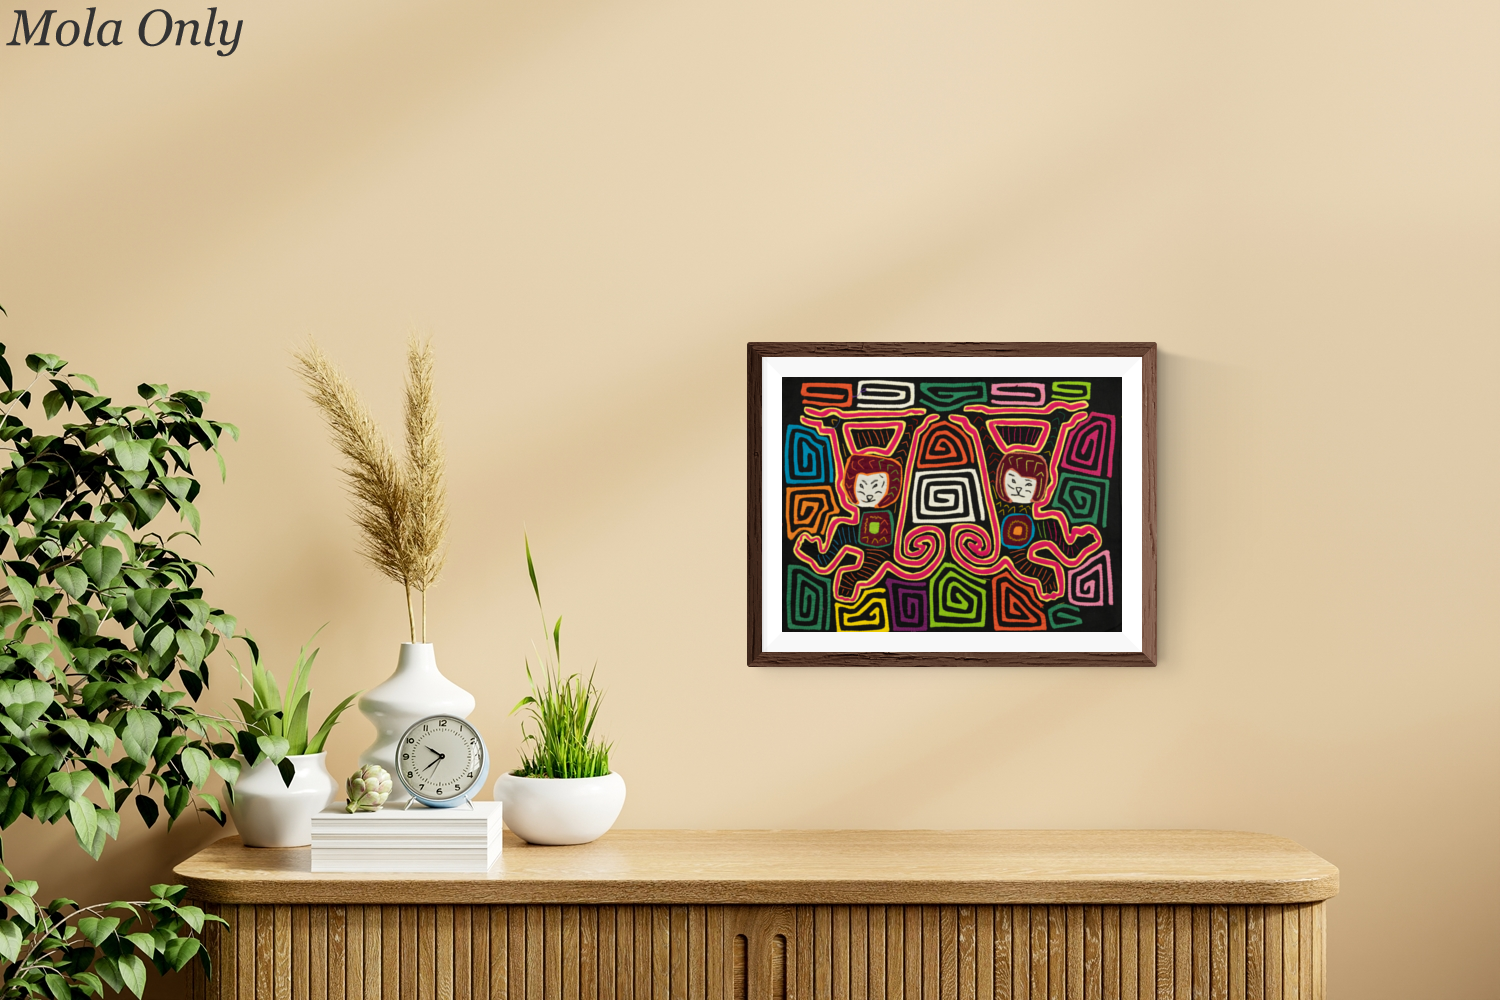 Space Cadet Monkey Mola, Wall Decor, Panama Mola, Latin American Art, Handmade Quilt, Wall Hanging, Mola Wall Art